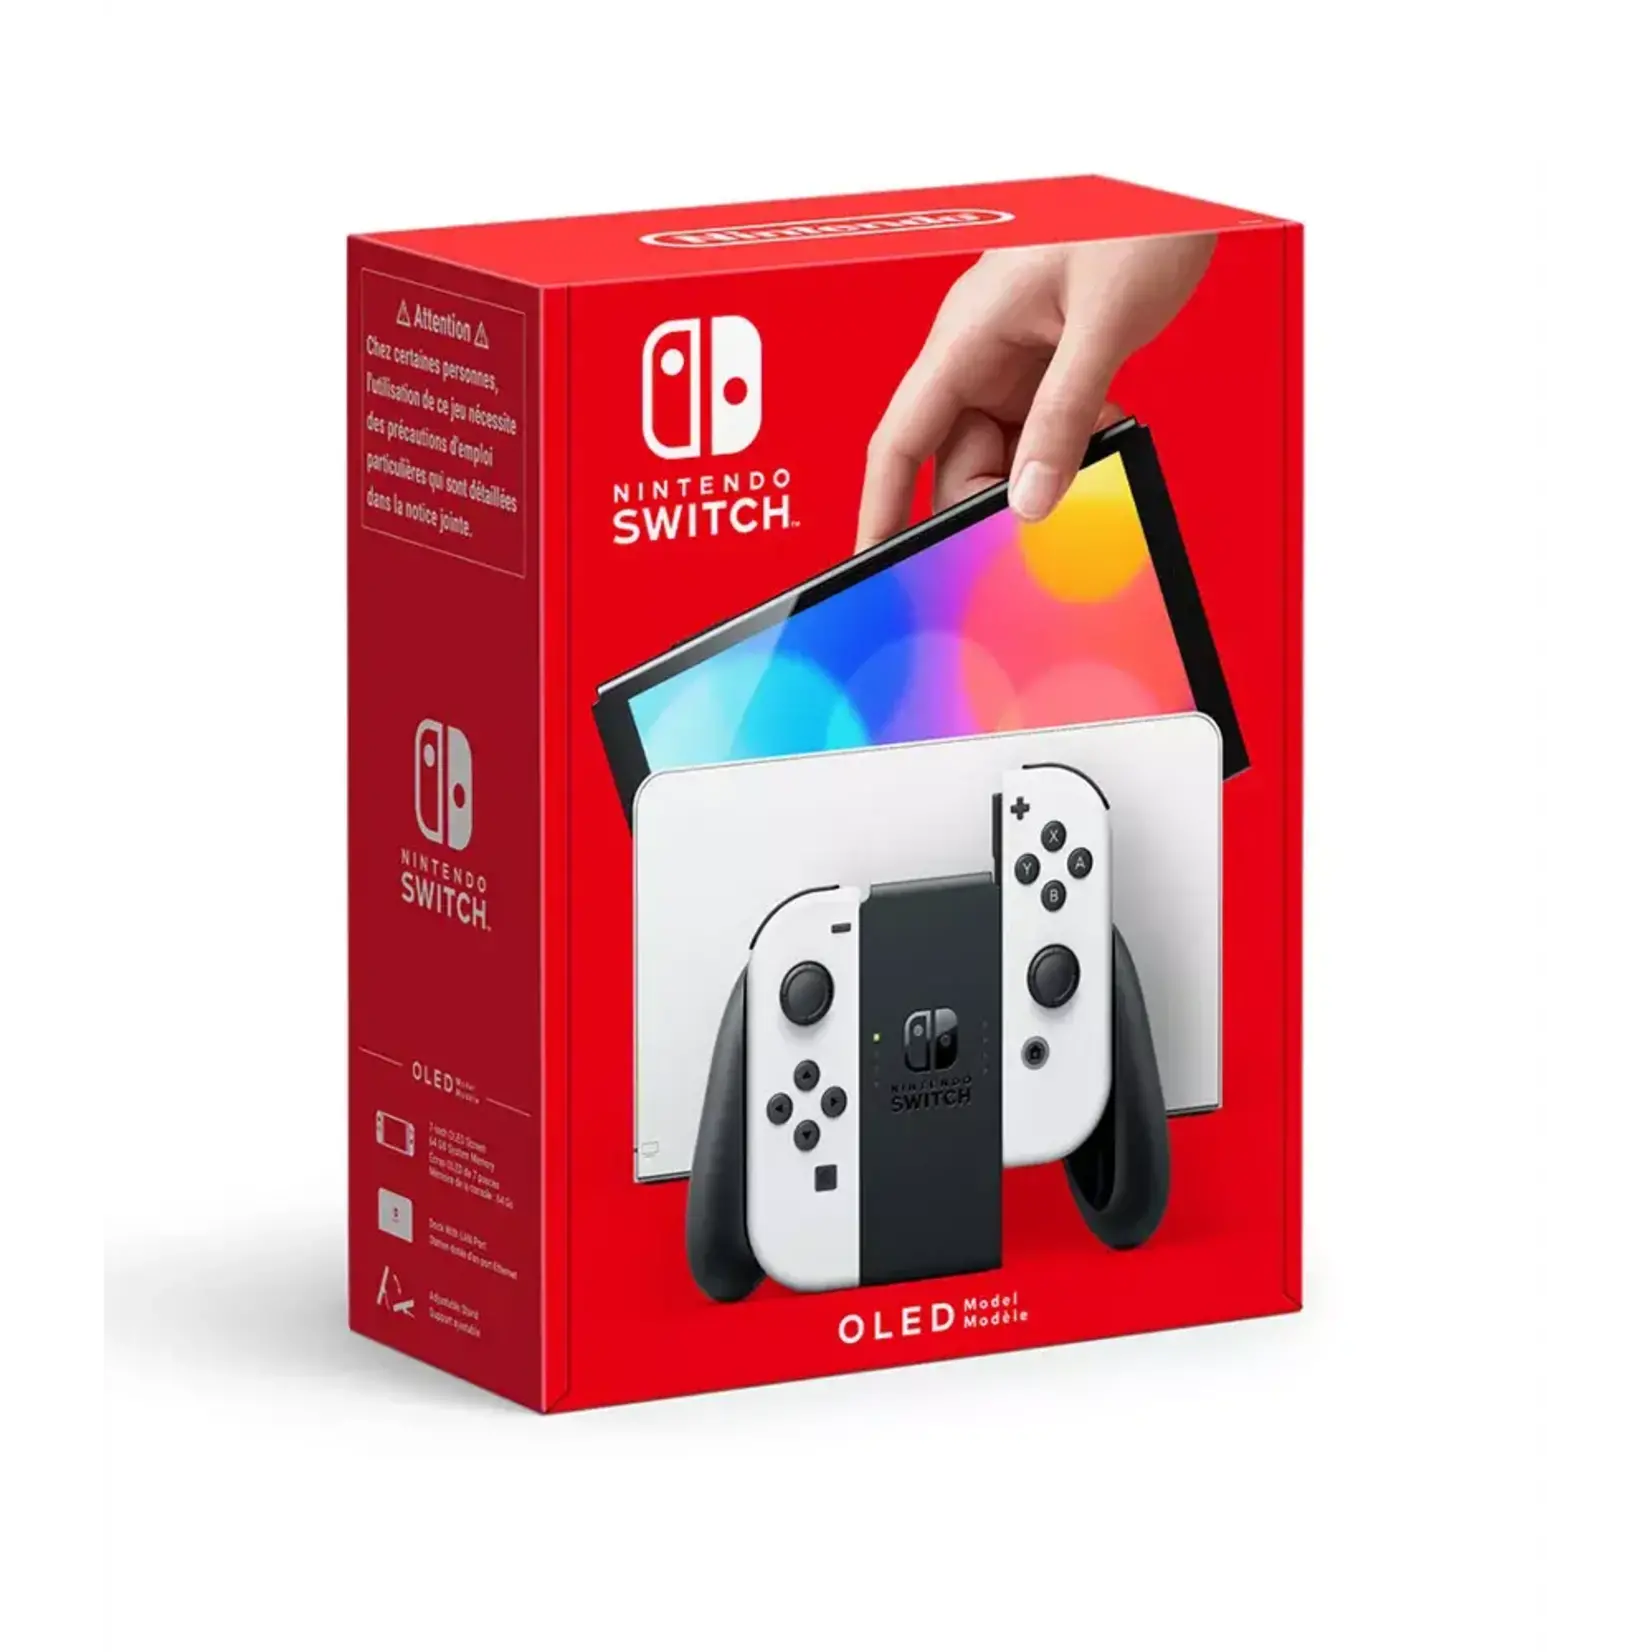 Nintendo Nintendo switch Oled